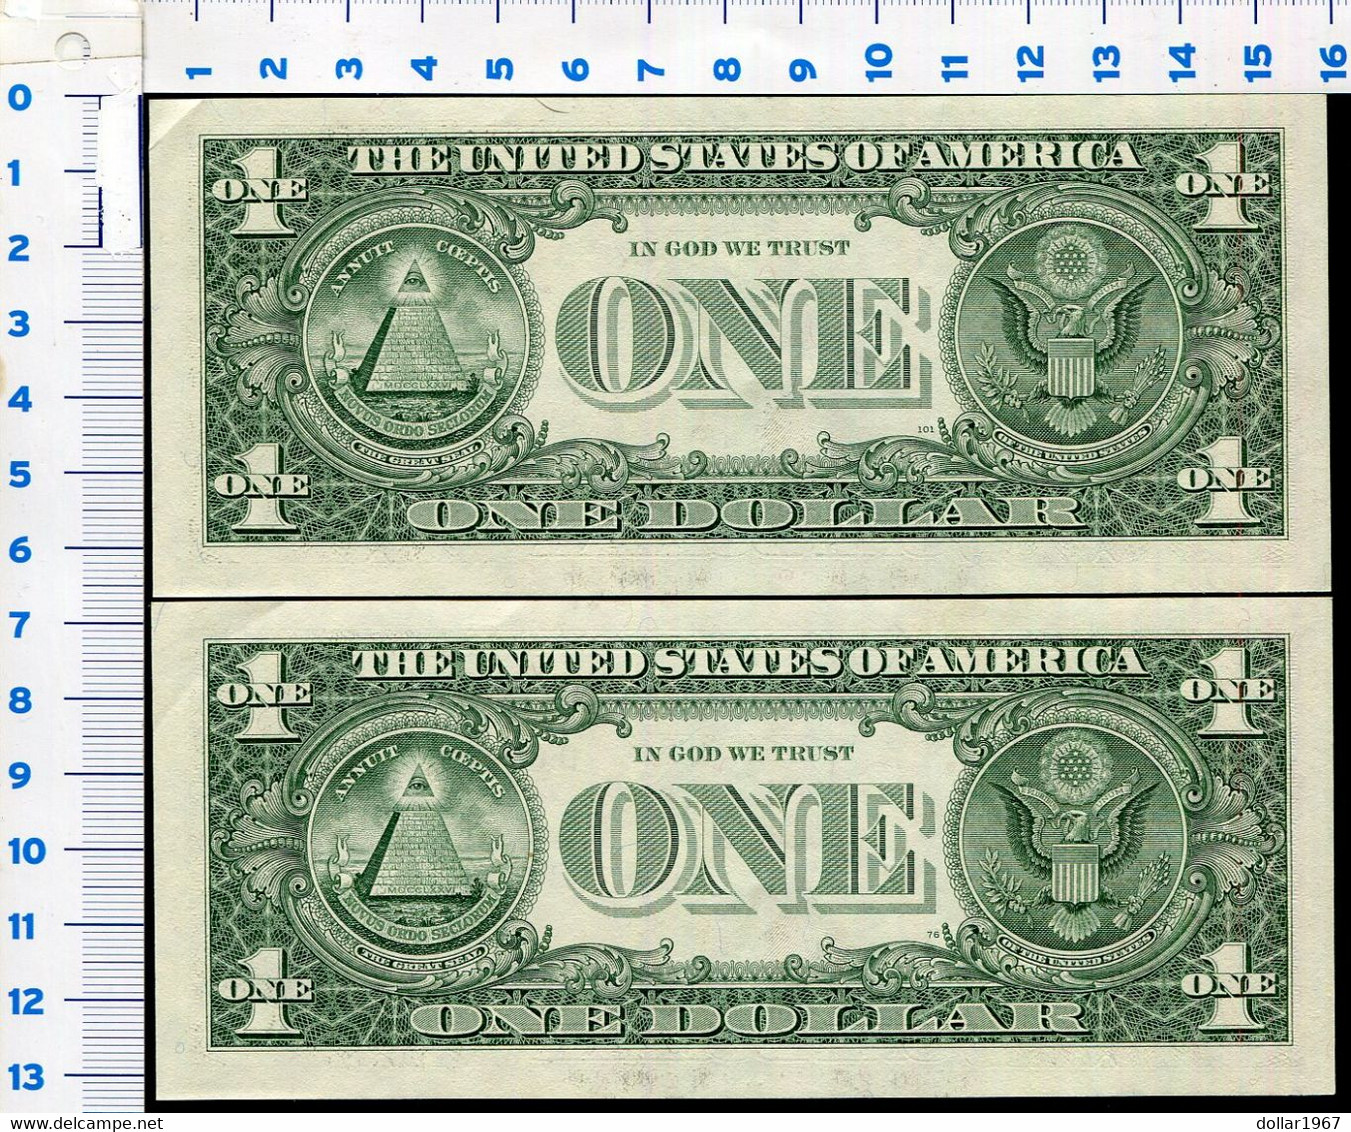 2 X USA 1 Dollar 2003 WASHINGTON P.537 - 4 D 06722413 / 14 B - Autres - Amérique